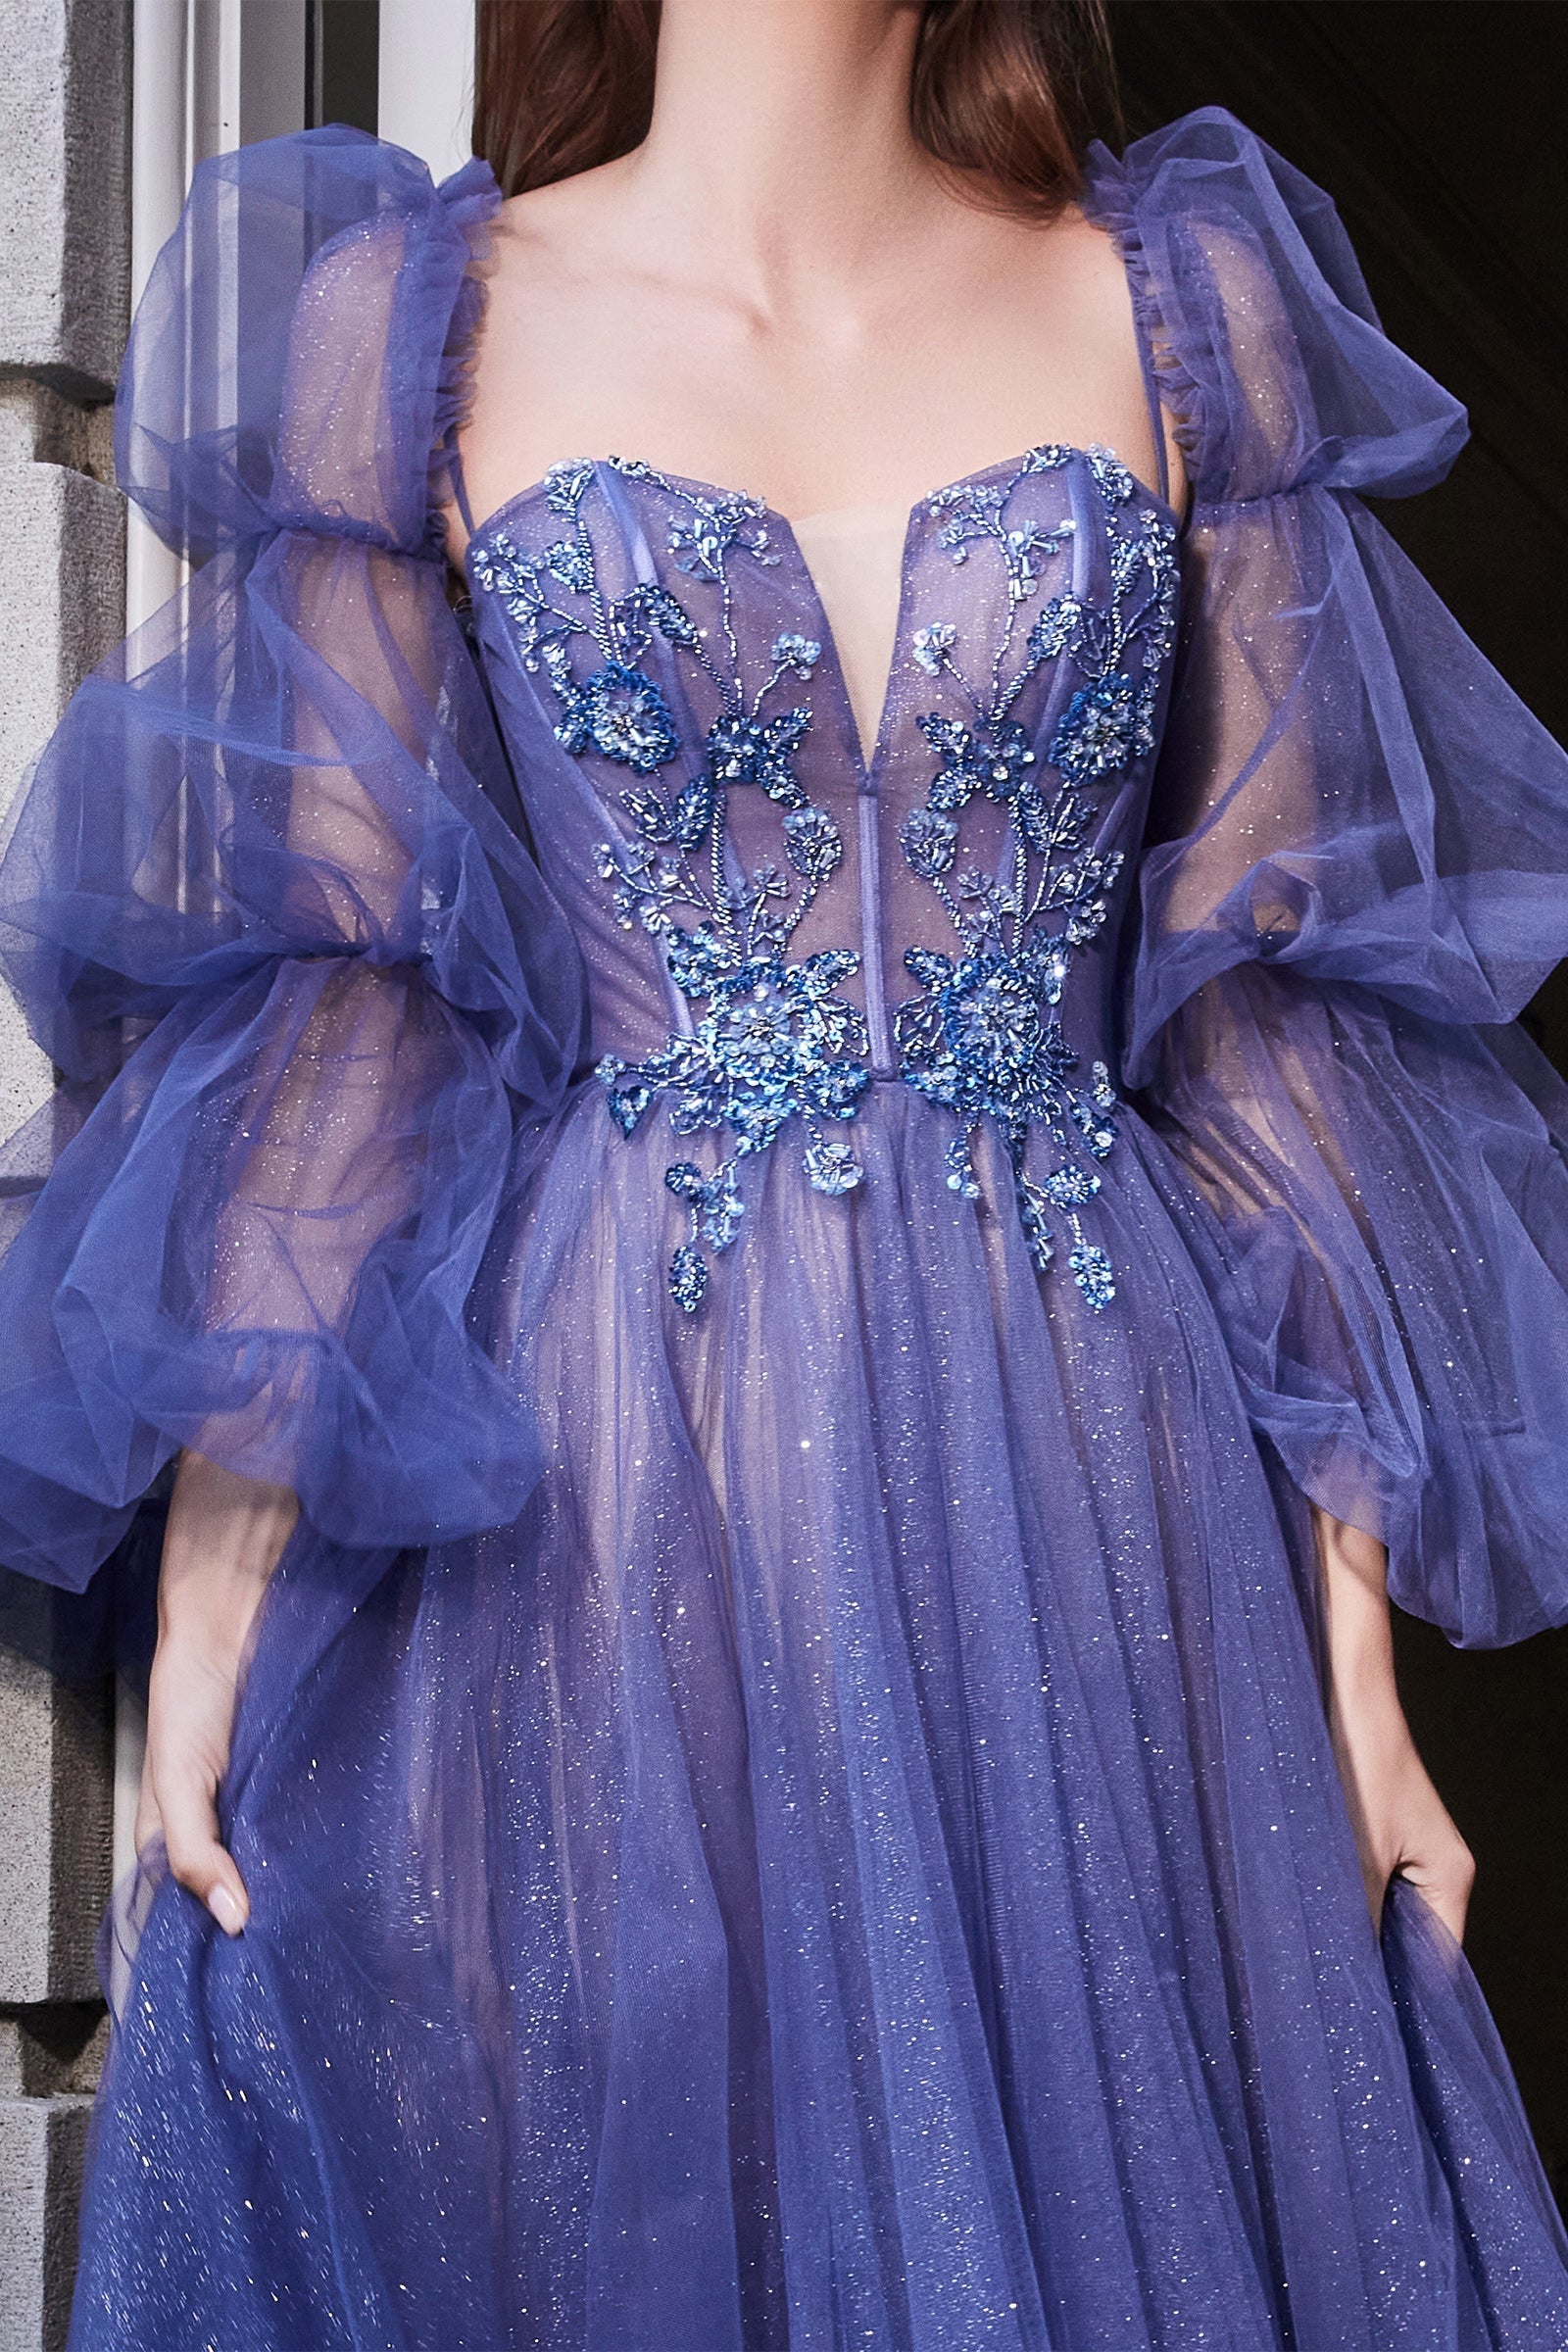 Cinderella Divine B709 Dress